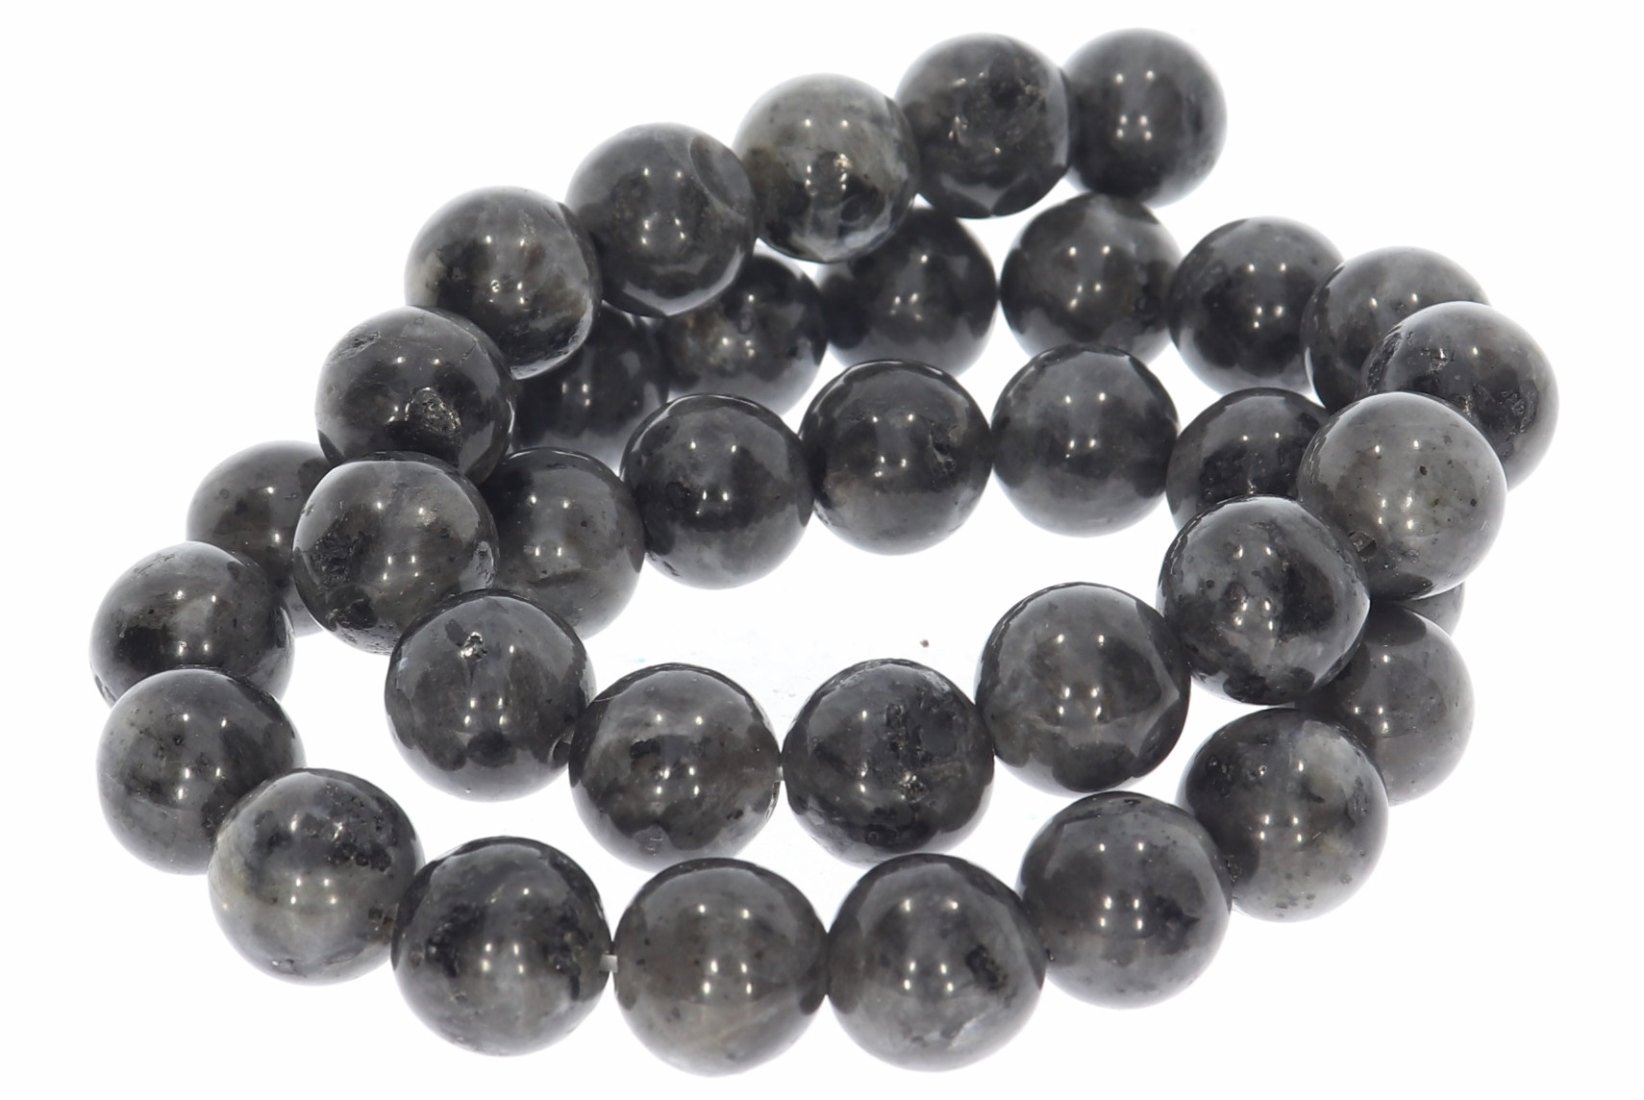 10S190 - Labradorit schwarz Kugel Strang Mineralien Edelstein